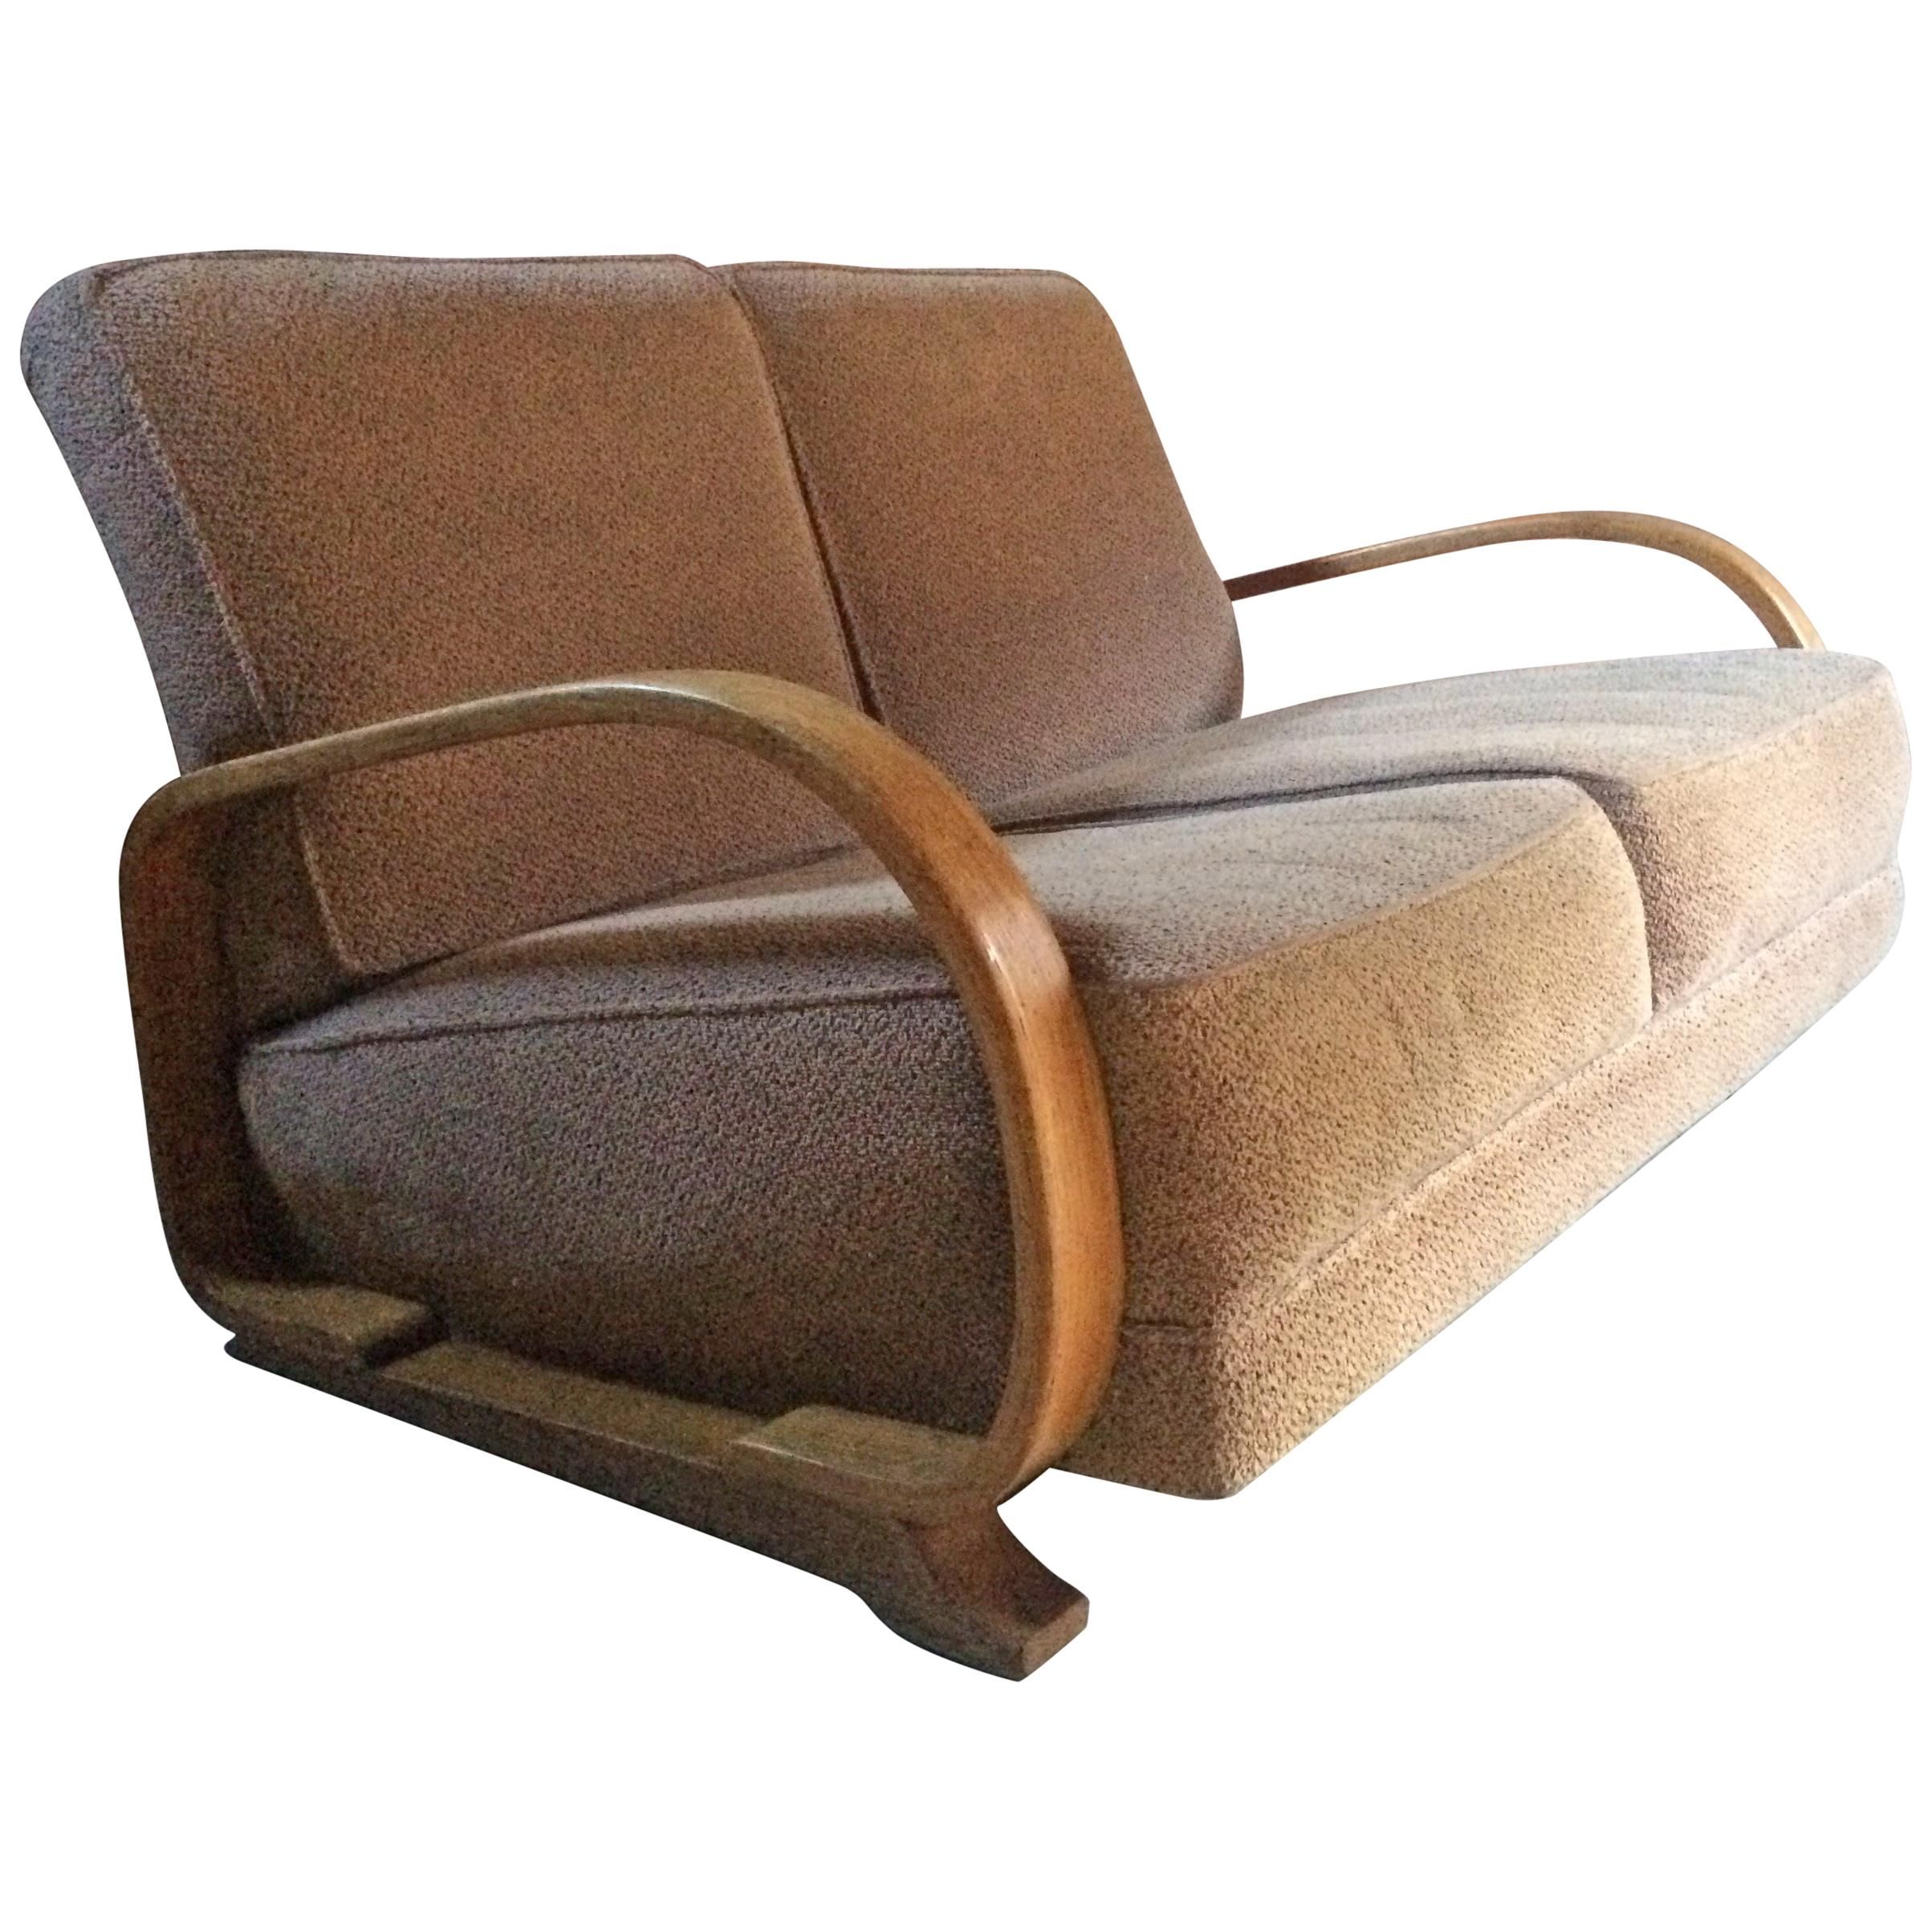 Gilbert Rohde for Heywood Wakefield Sofa Settee Two-Seat Art Deco Streamline